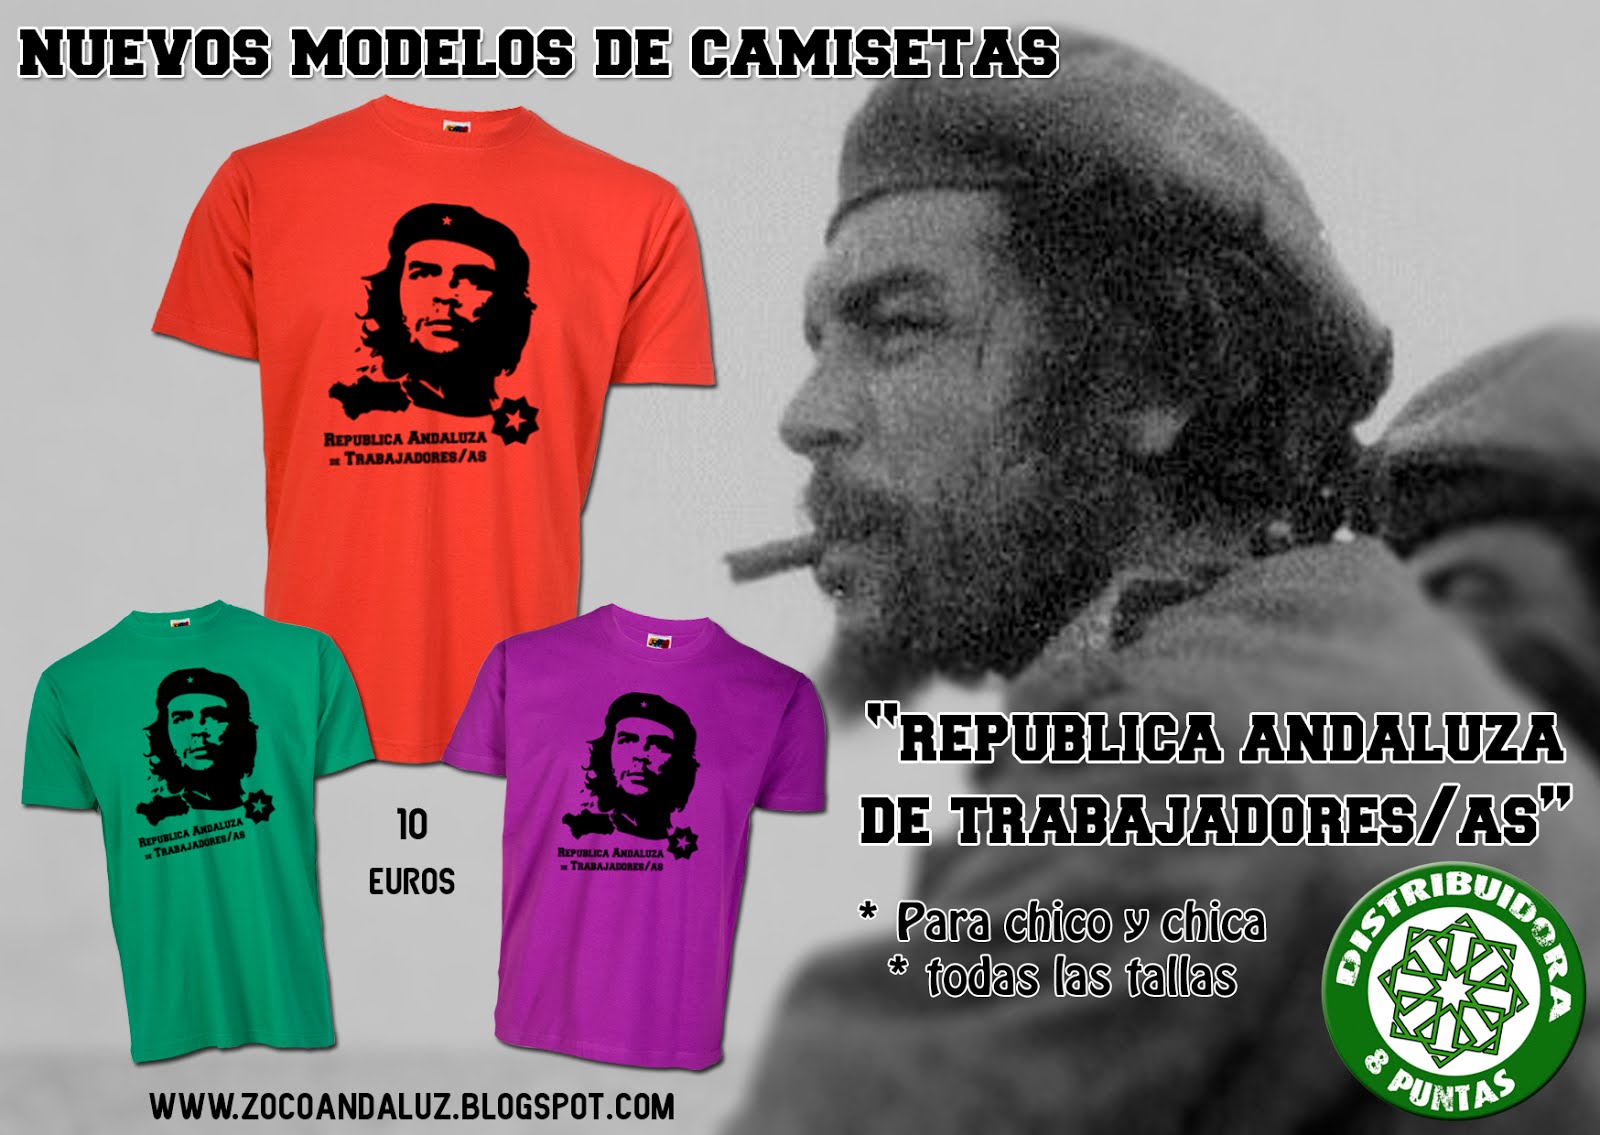 Camiseta República Andaluza Trabajadores/as, Che Guevara